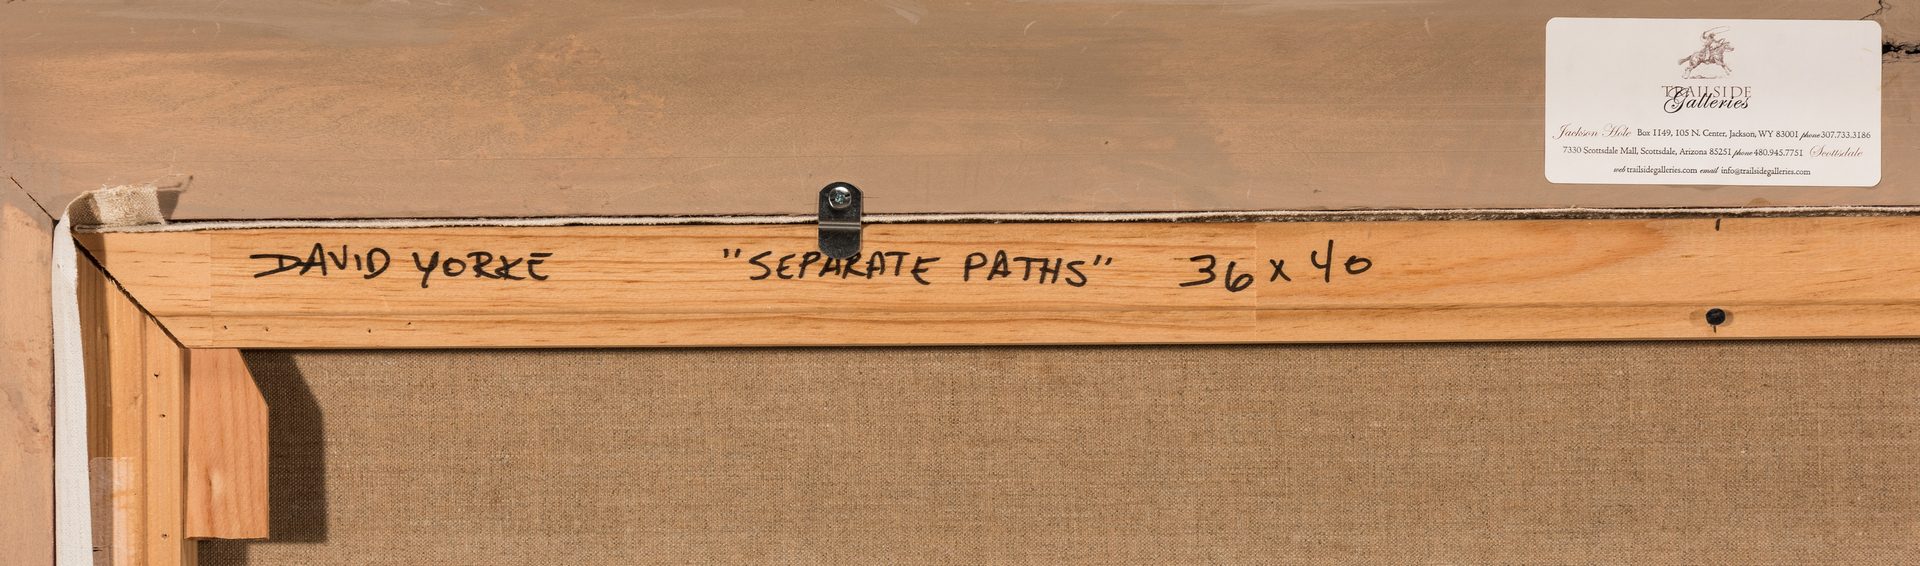 Lot 425: David Yorke, O/C, Separate Paths